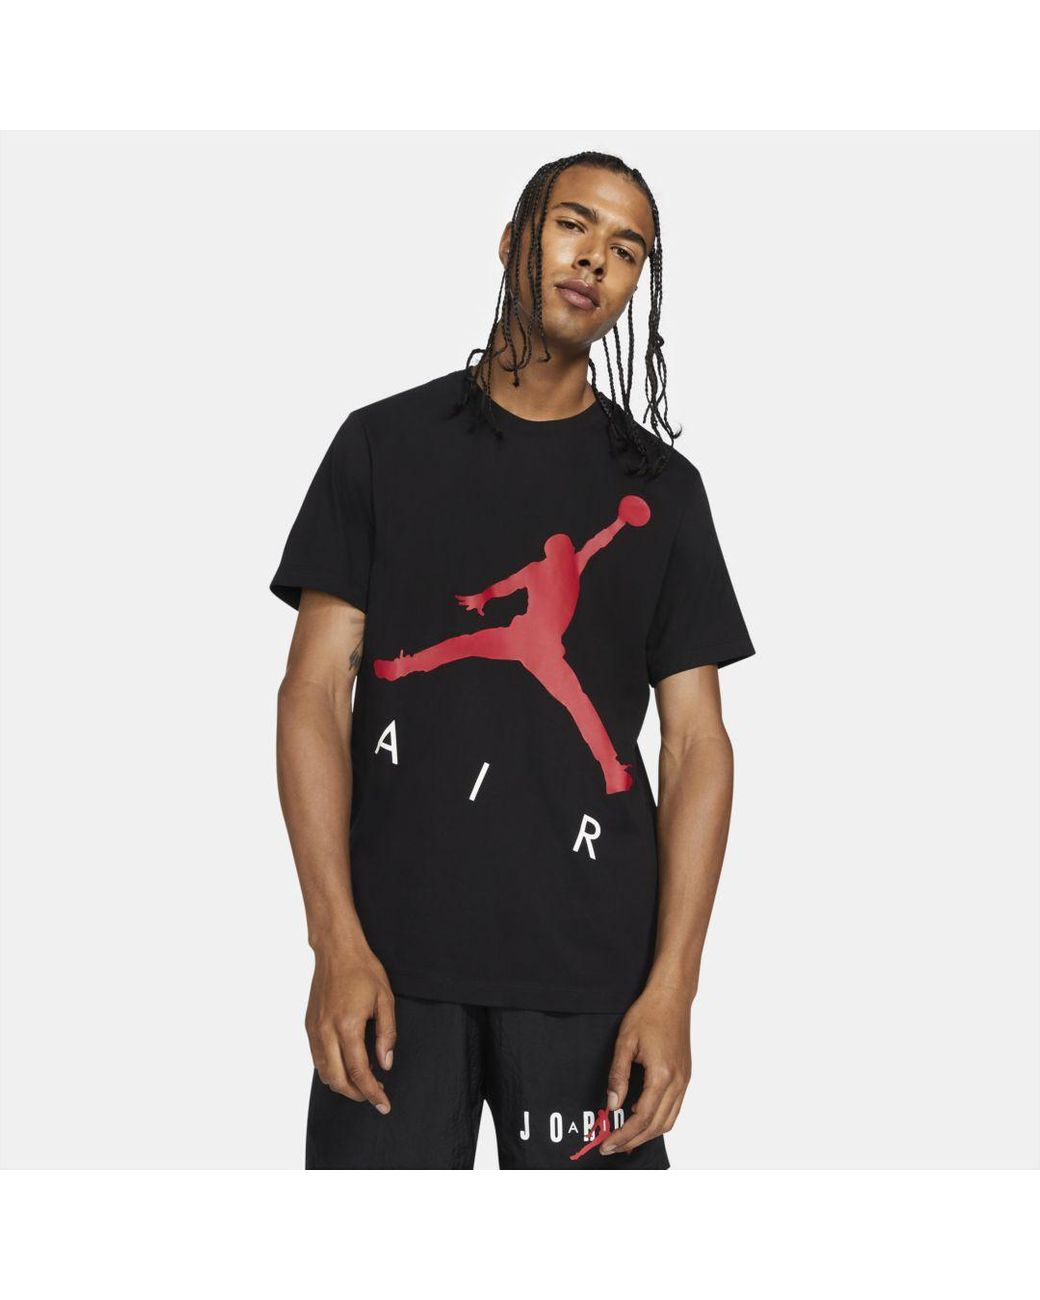 Nike Cotton Jordan Jumpman Air Short-sleeve T-shirt in Black for Men - Lyst